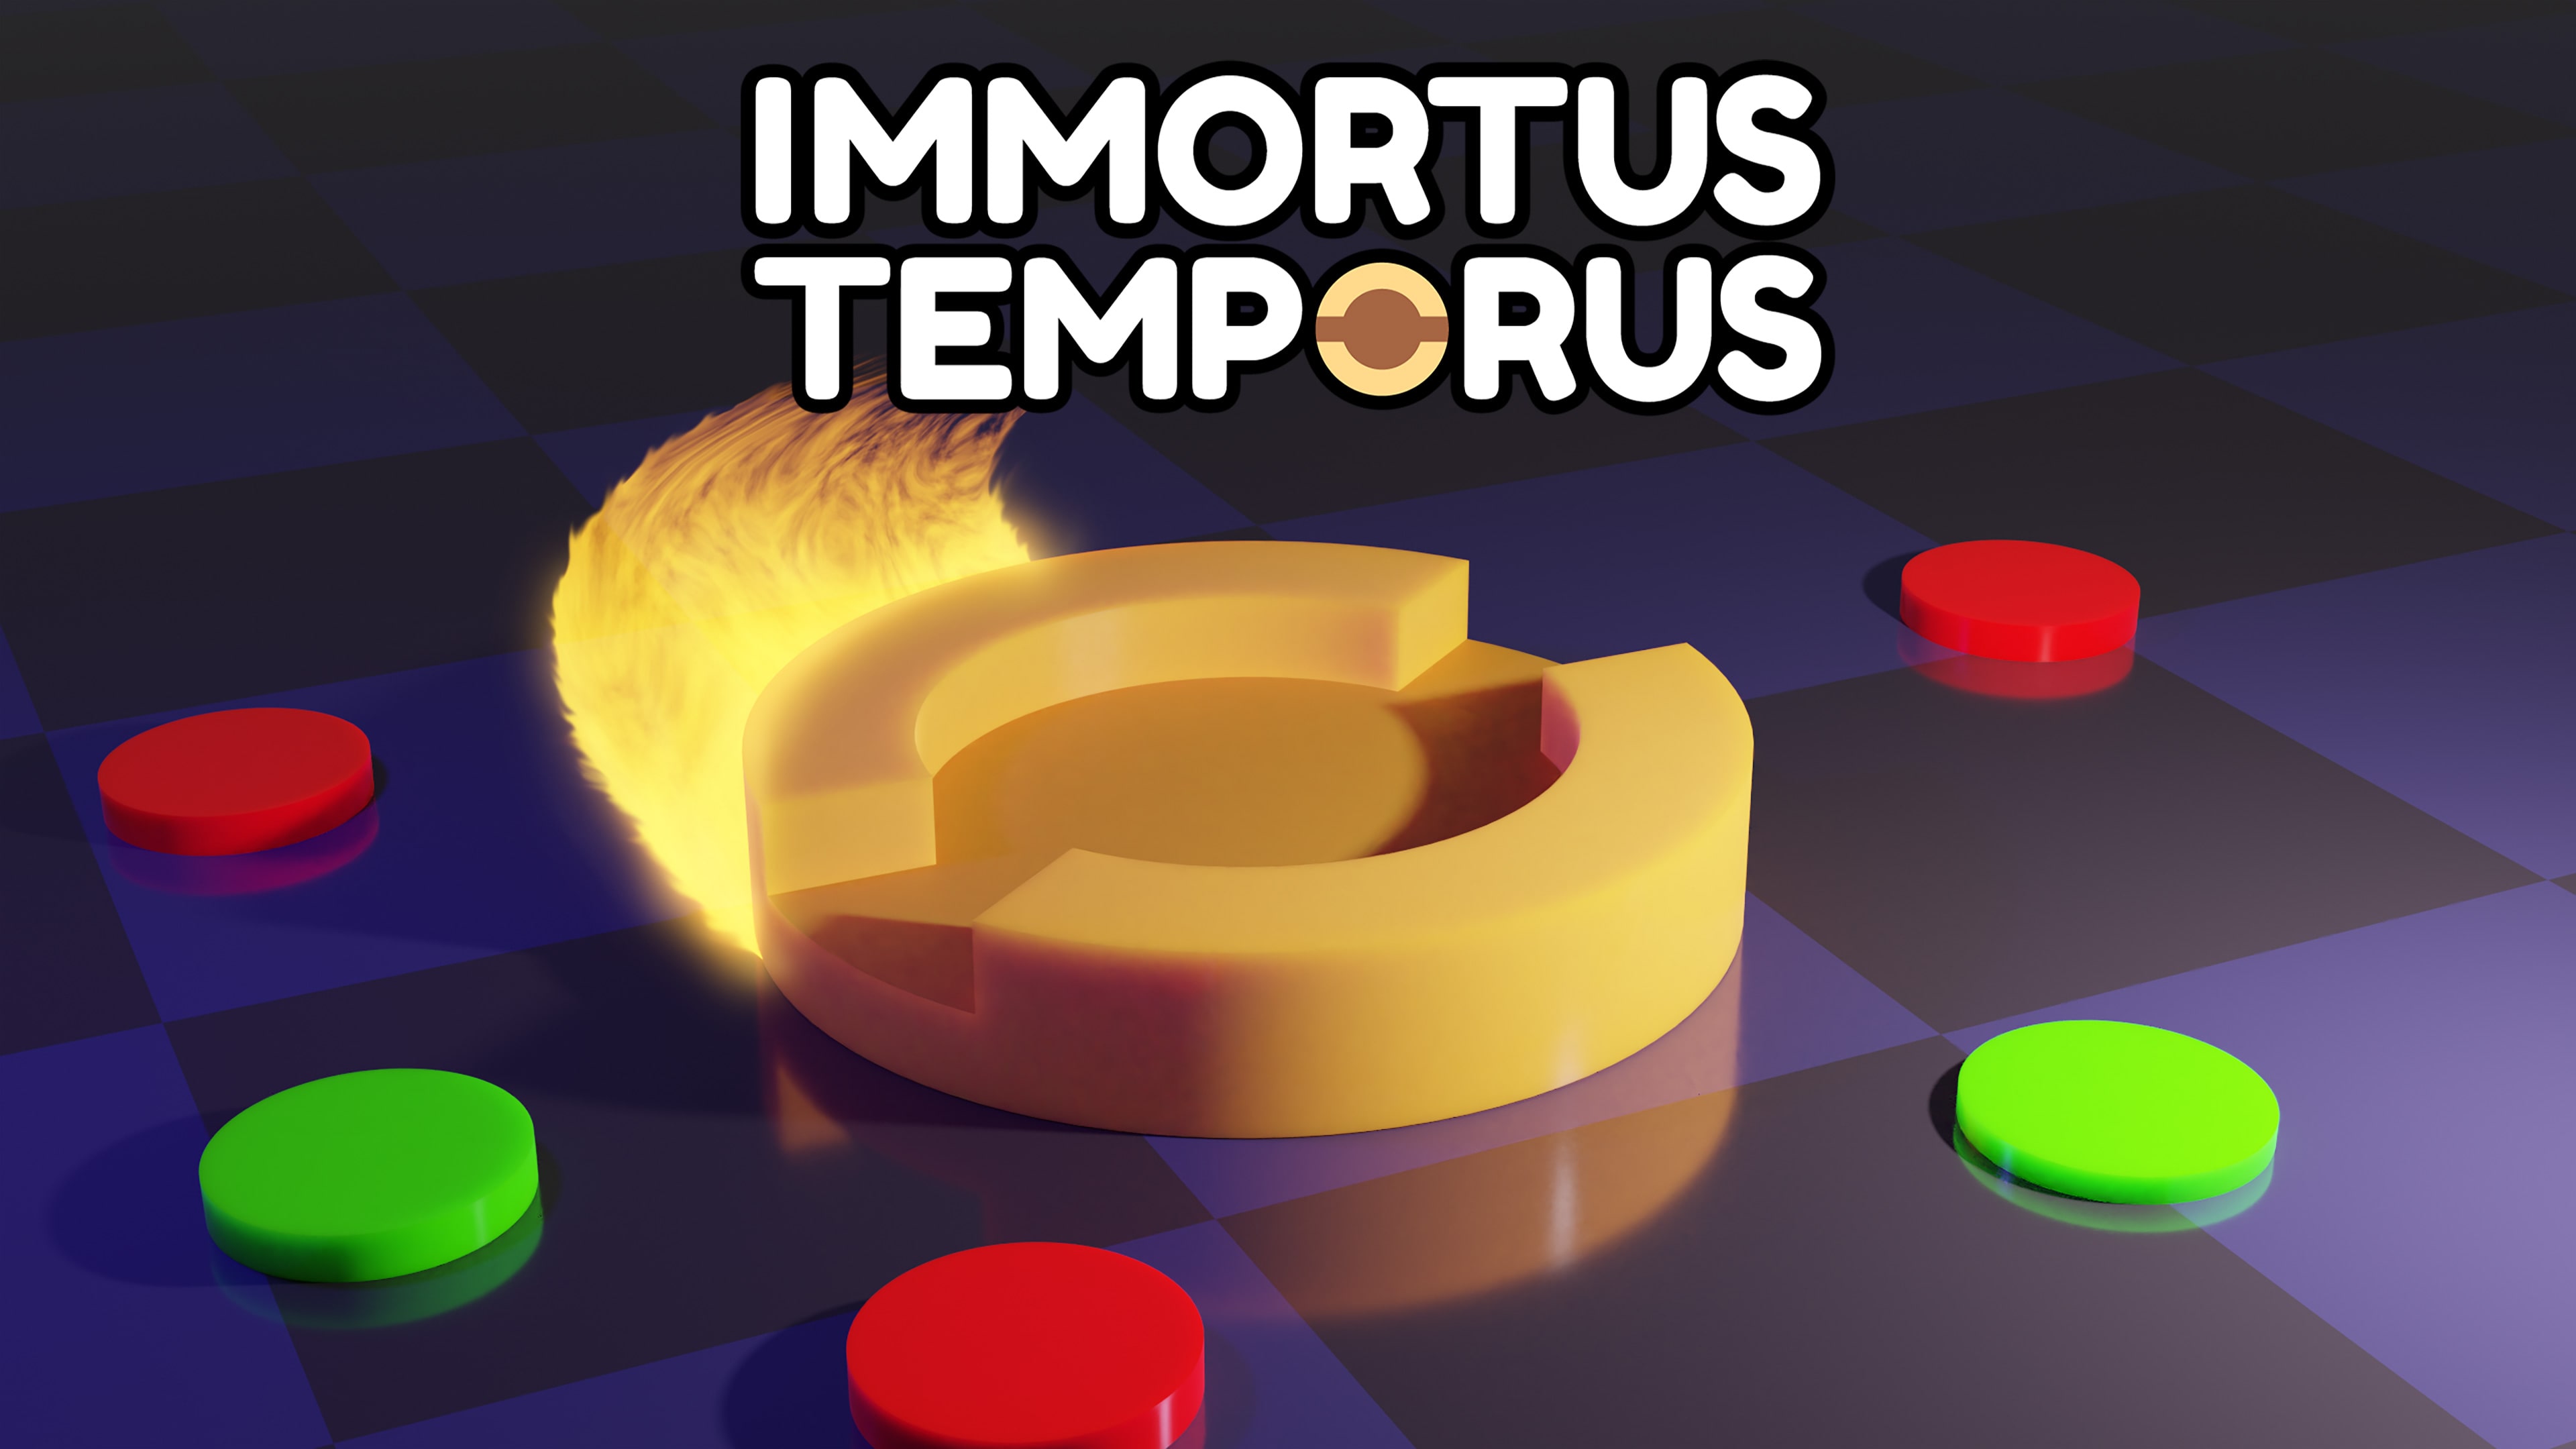 Immortus Temporus (Simplified Chinese, English, Korean, Japanese, Traditional Chinese)